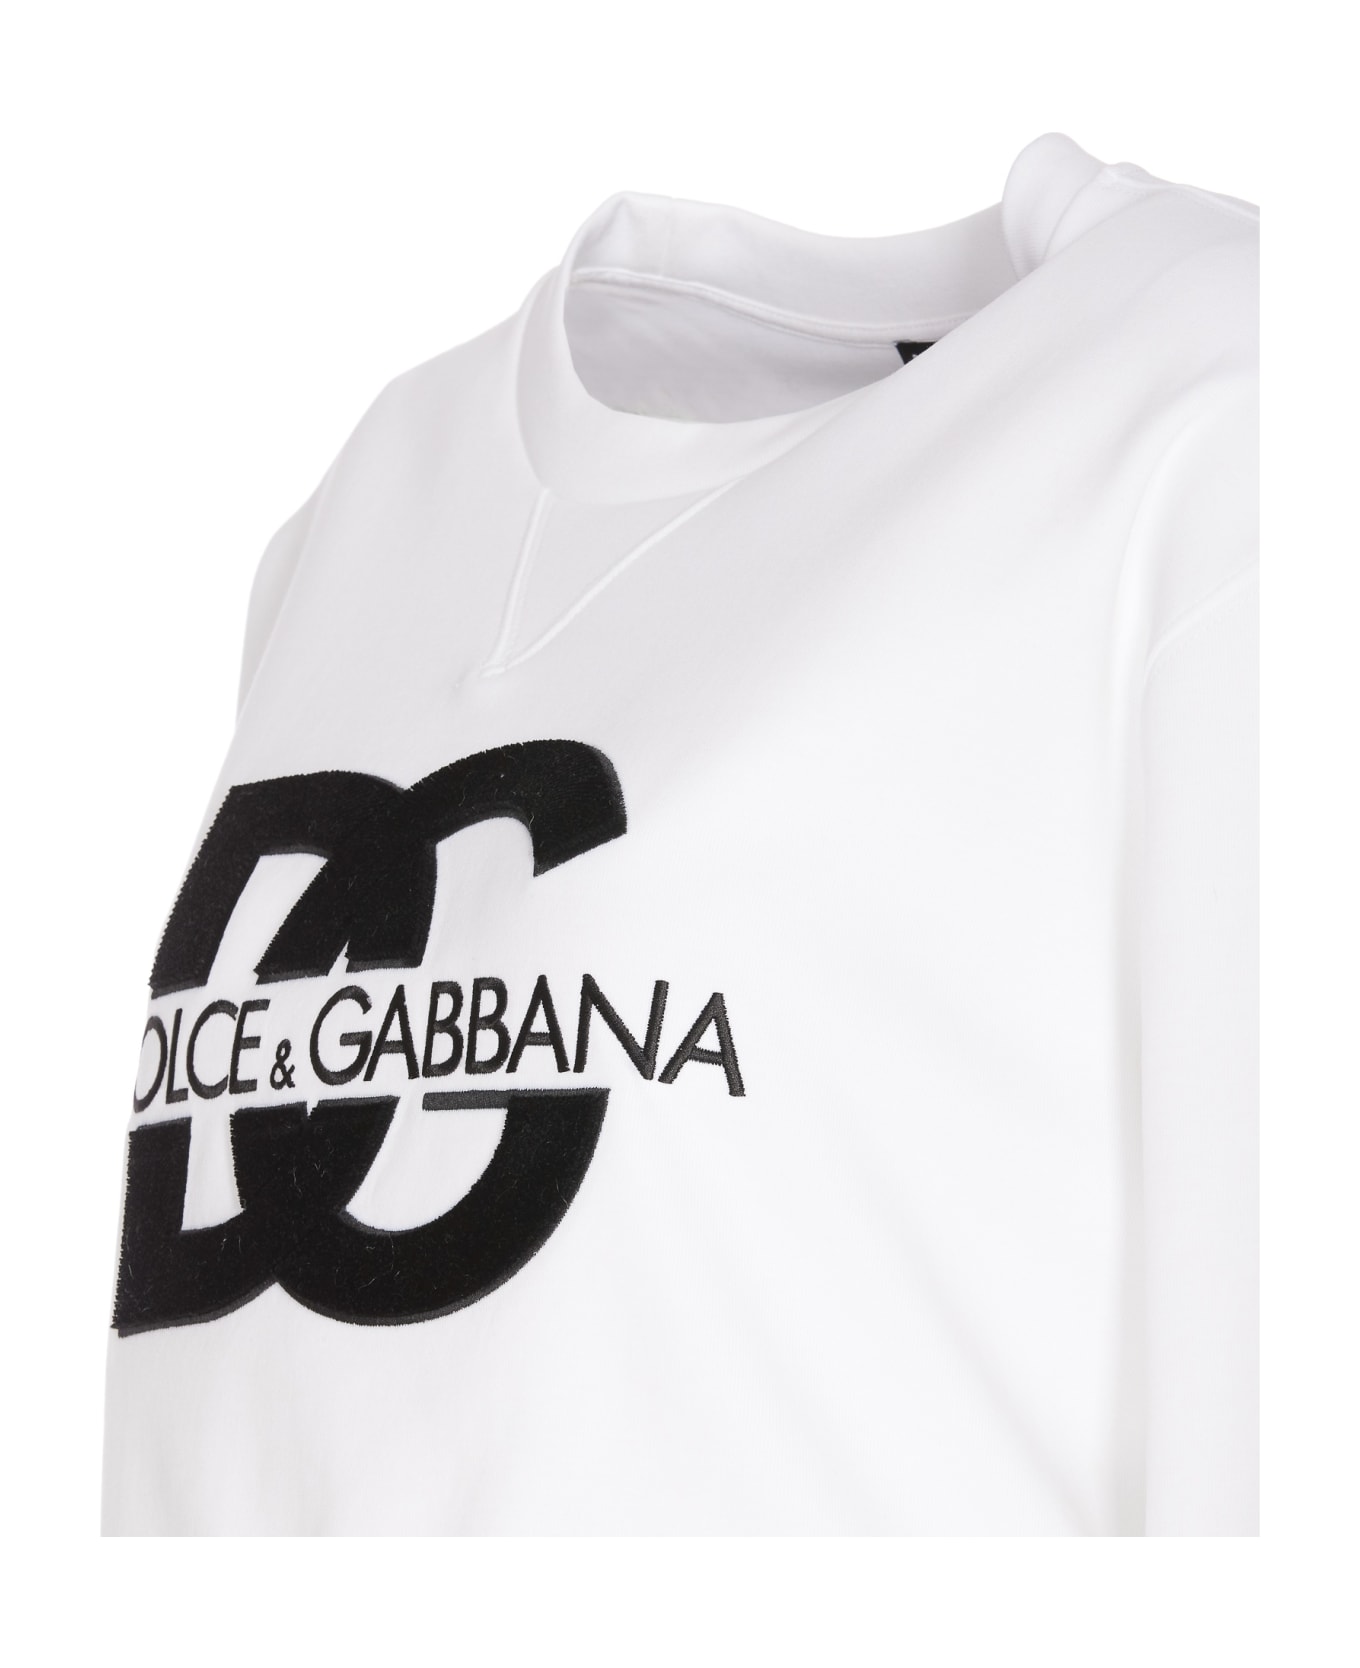 Dolce & Gabbana Dg Logo Sweatshirt